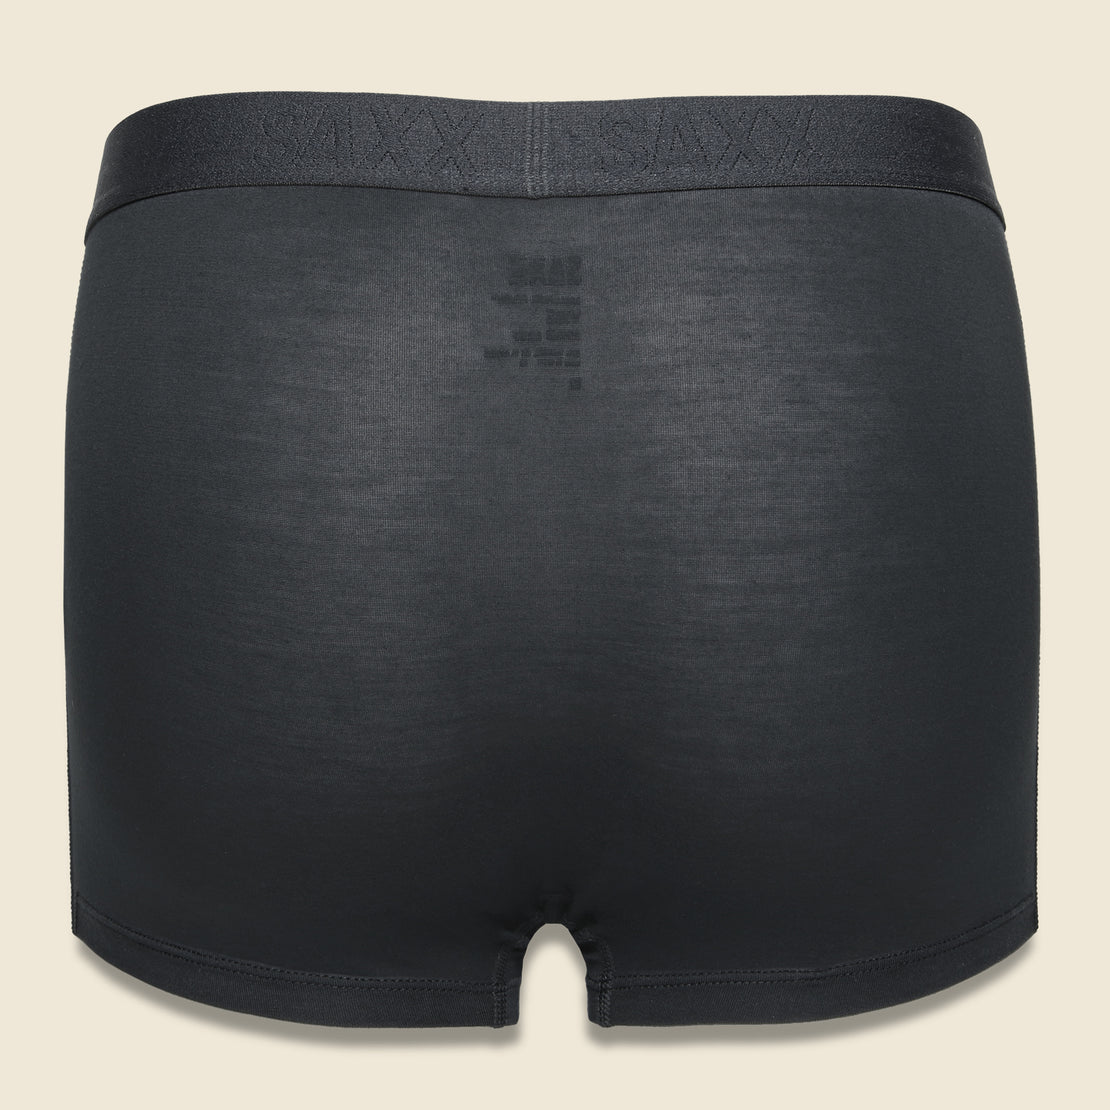 Vibe Trunk - Black - SAXX - STAG Provisions - Accessories - Underwear